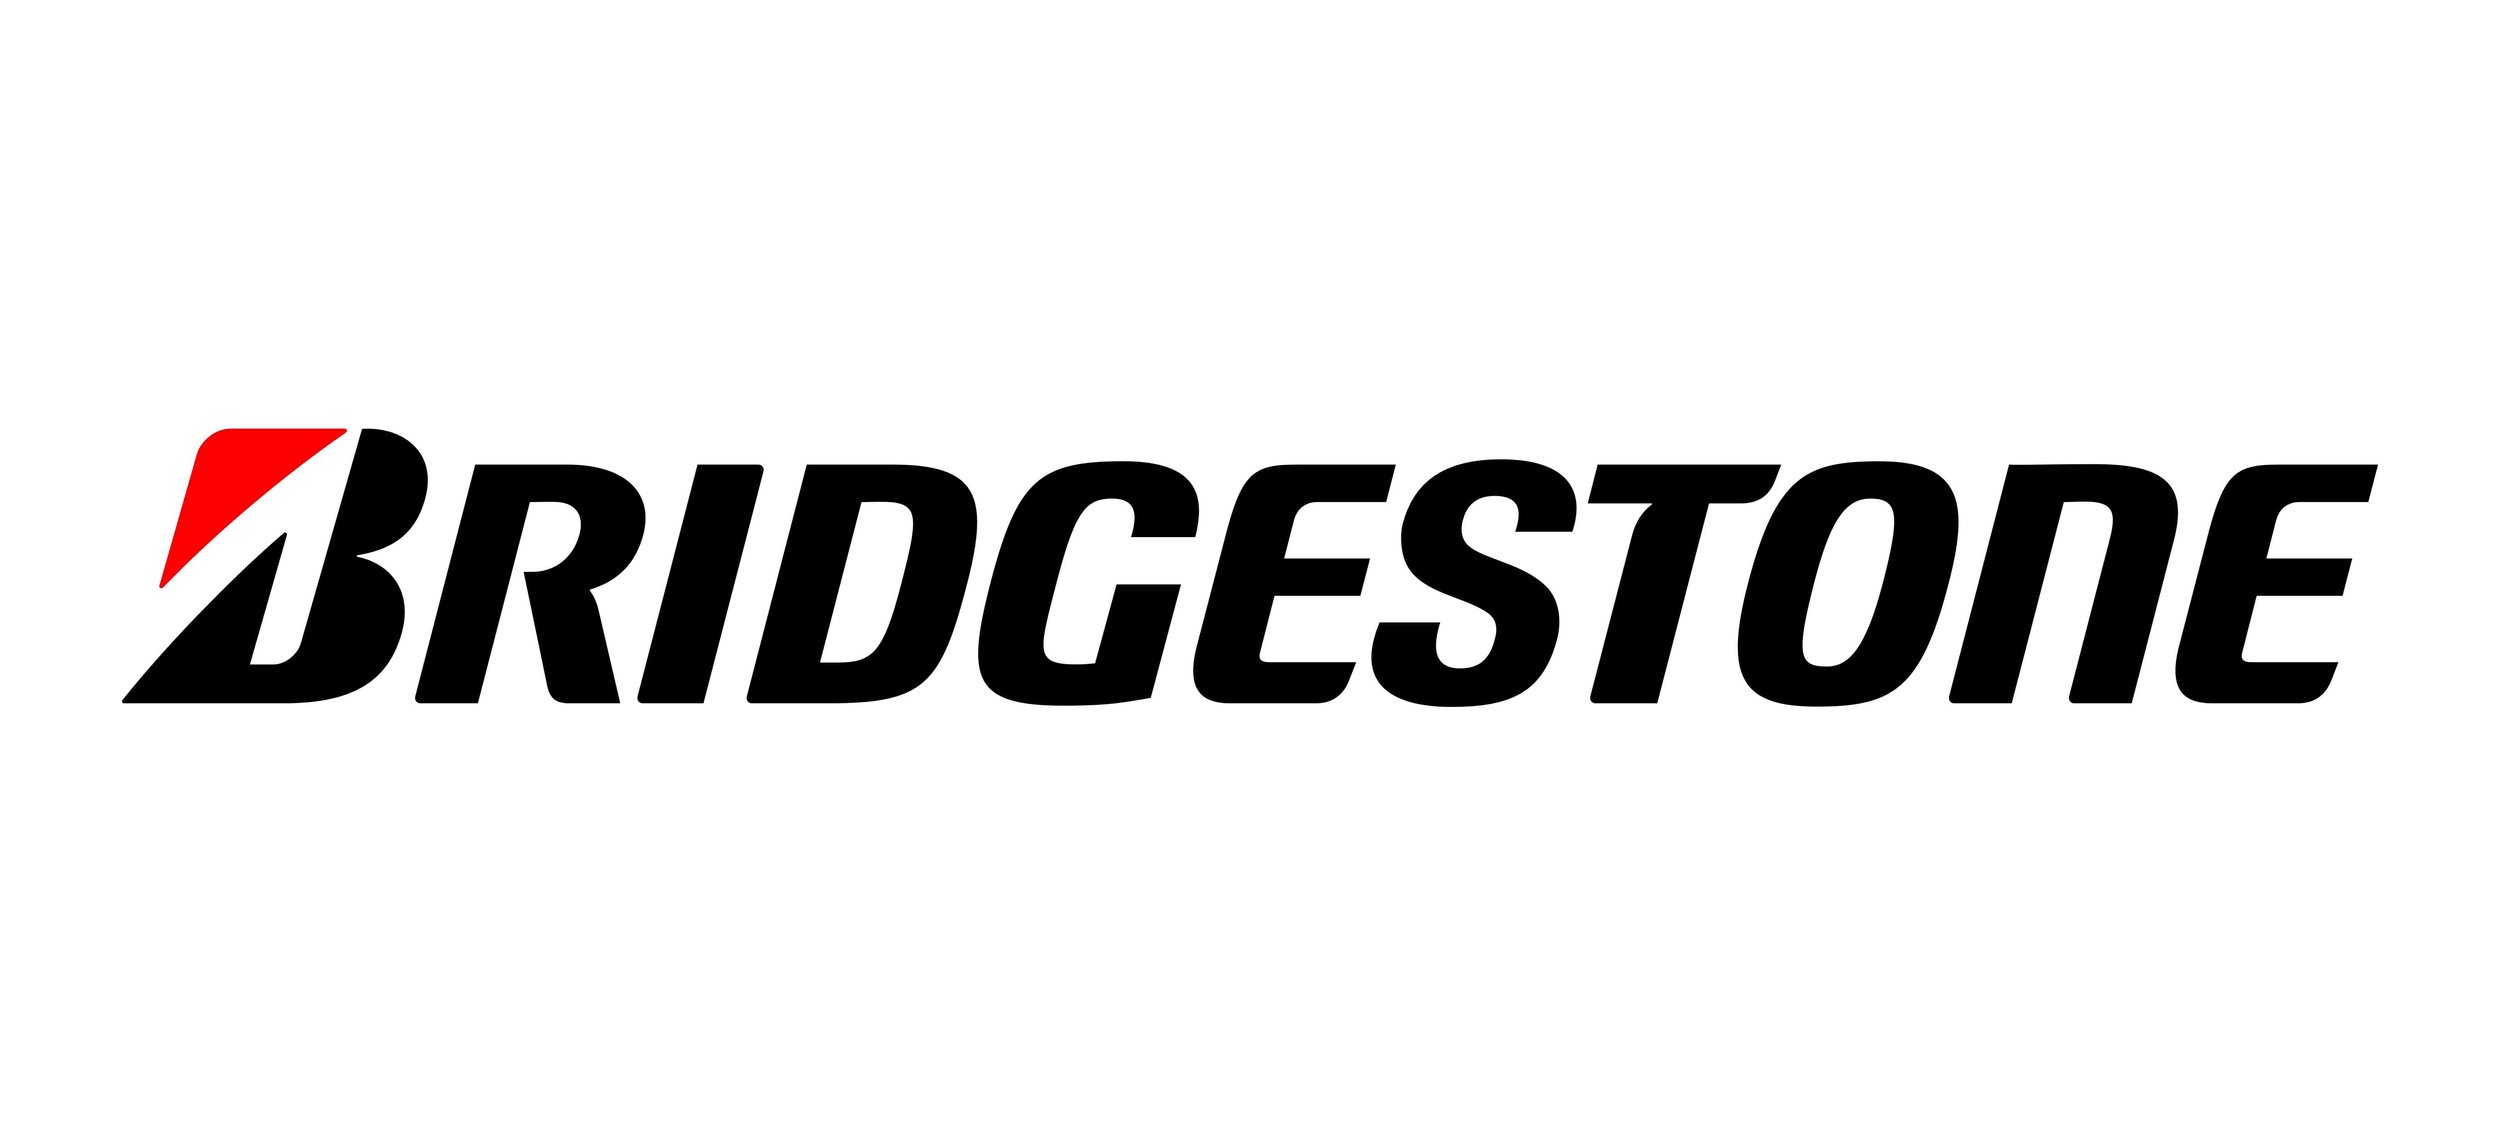 Bridgestone-logo.jpg